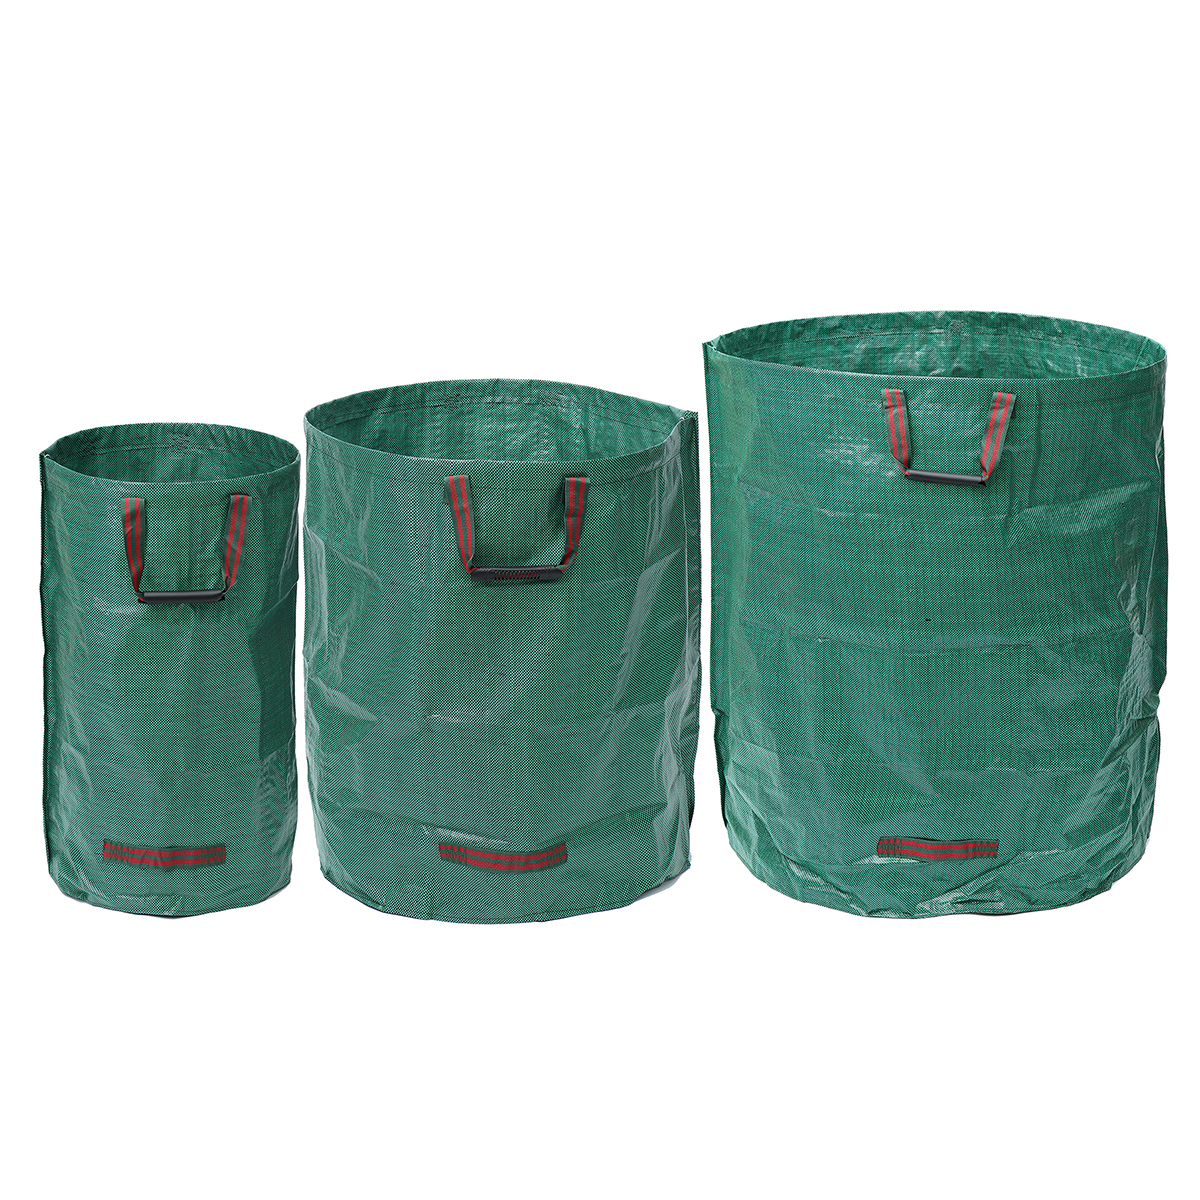 Strong-Garden-Bag-Waste-Refuse-Rubbish-Grass-Sack-Reusable-Heavy-Duty-Large-Trash-Bag-1434320-2